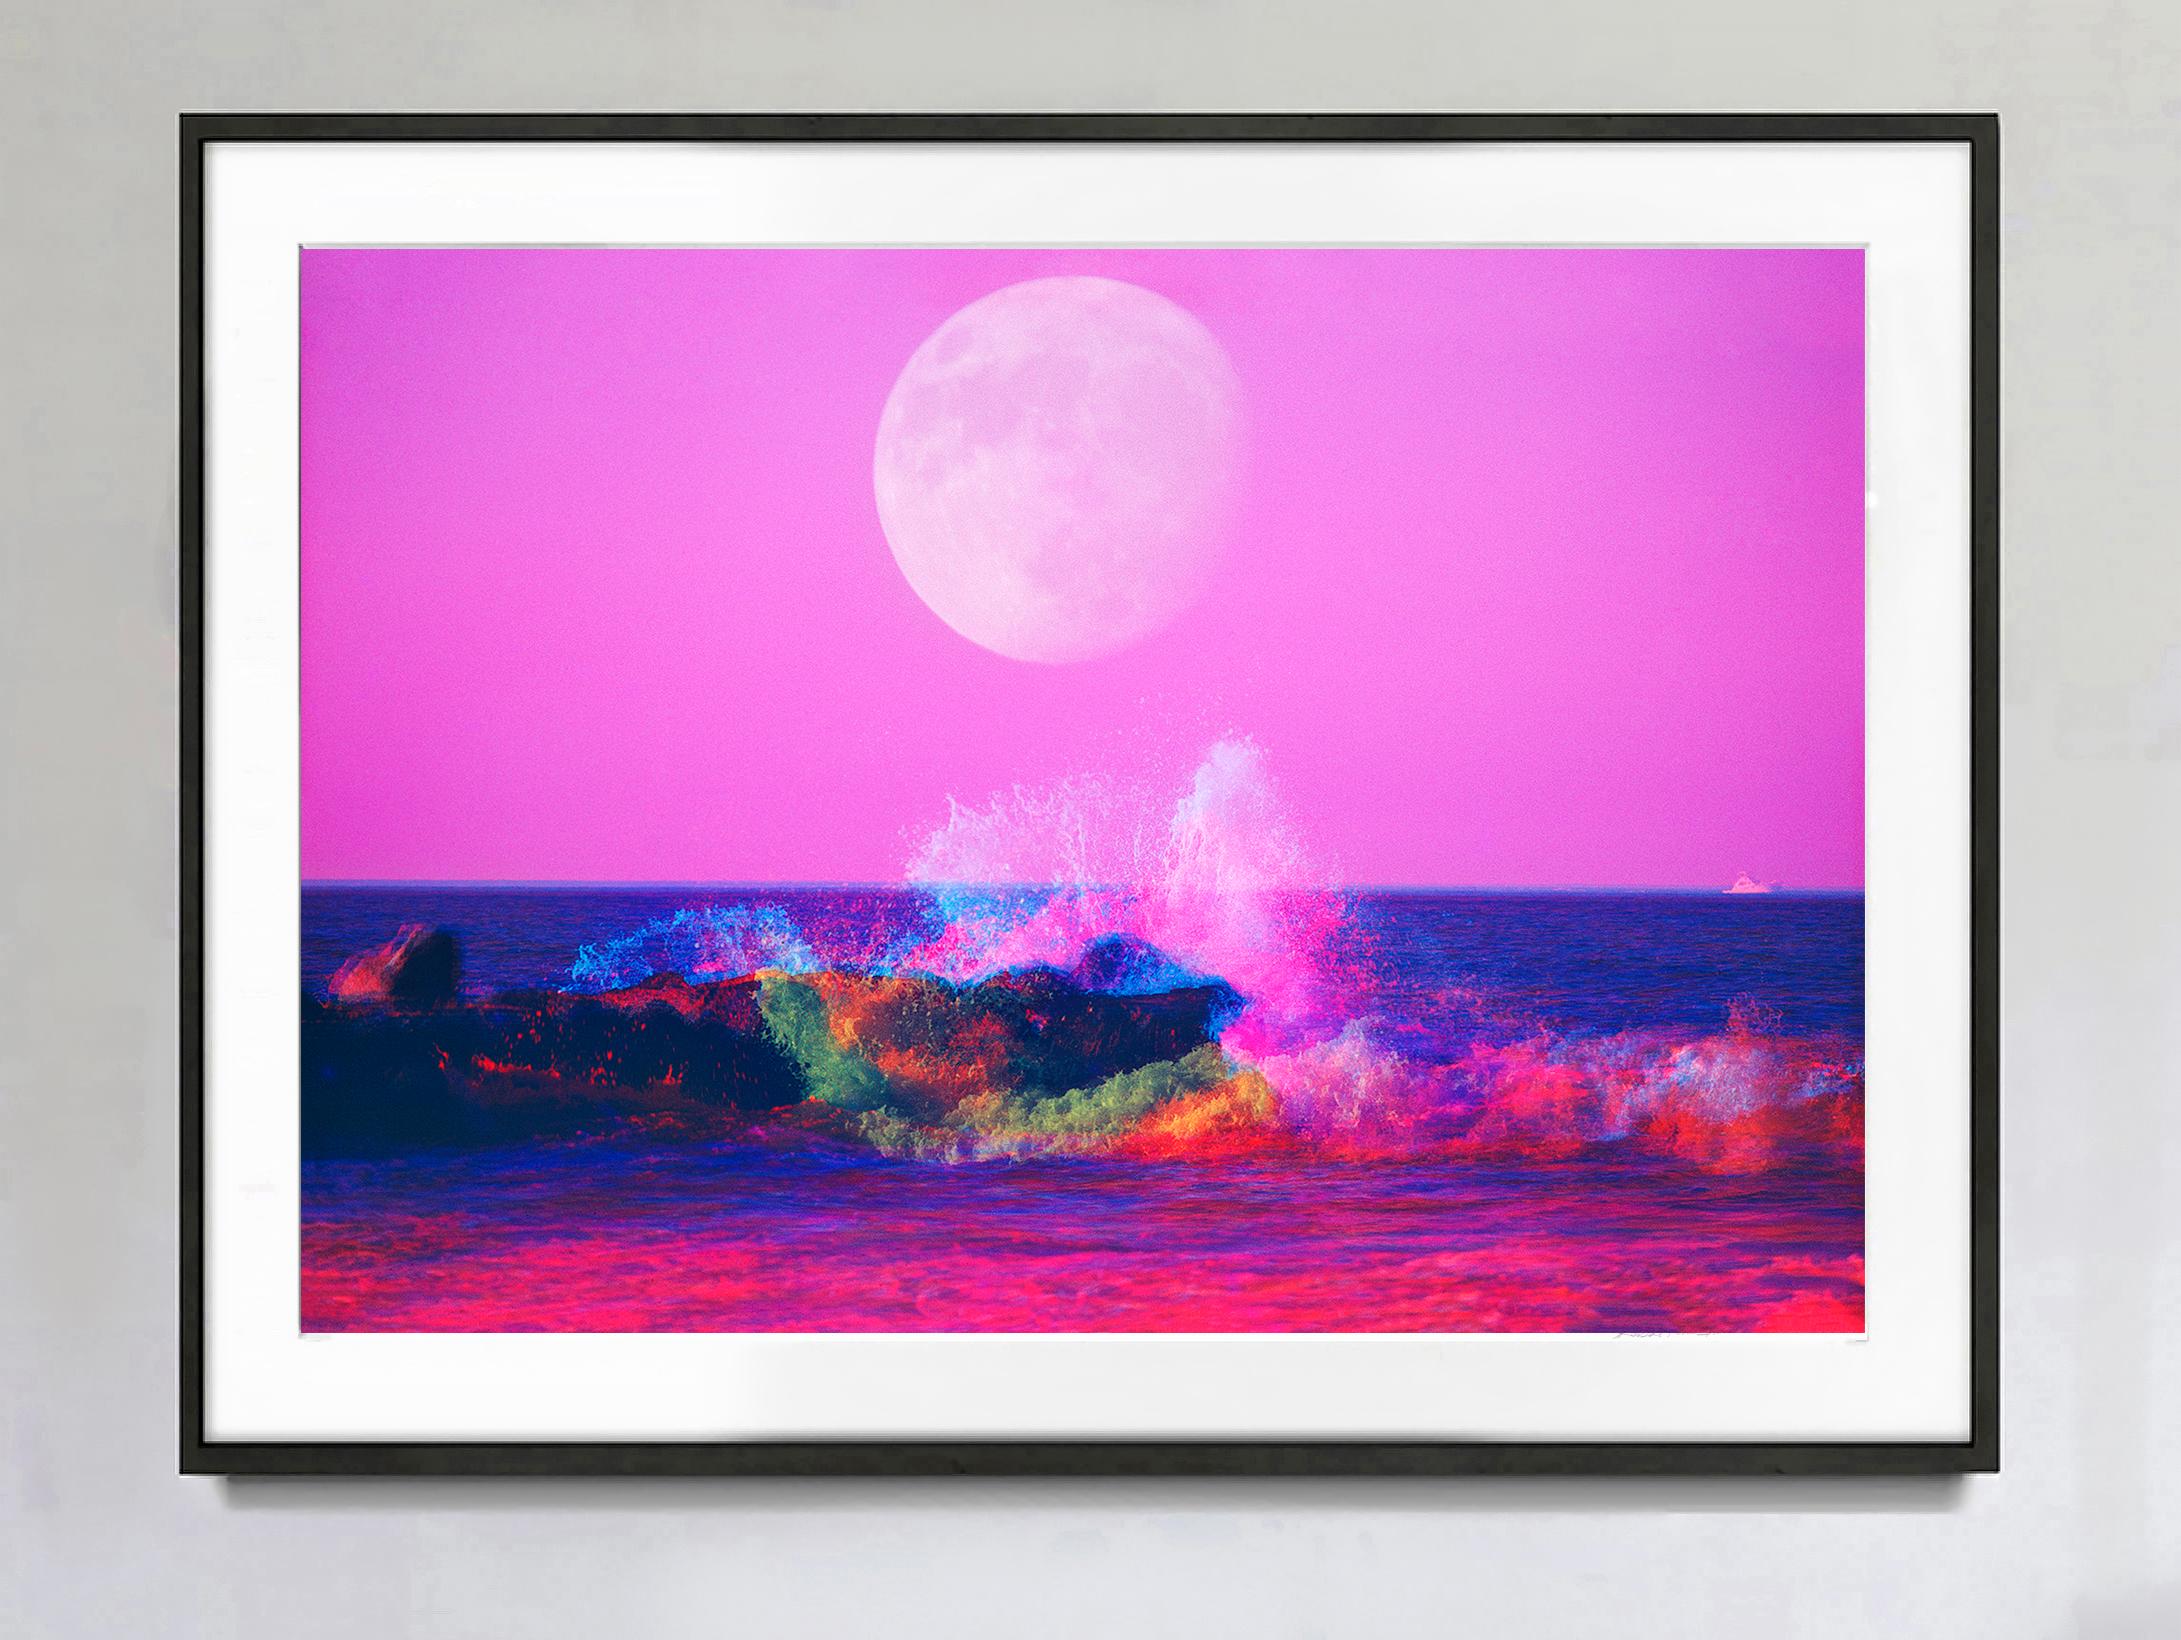 Big Moon over Magenta Sea - Pink Crashing Wave at New Jersey Shore - Photograph by Mitchell Funk